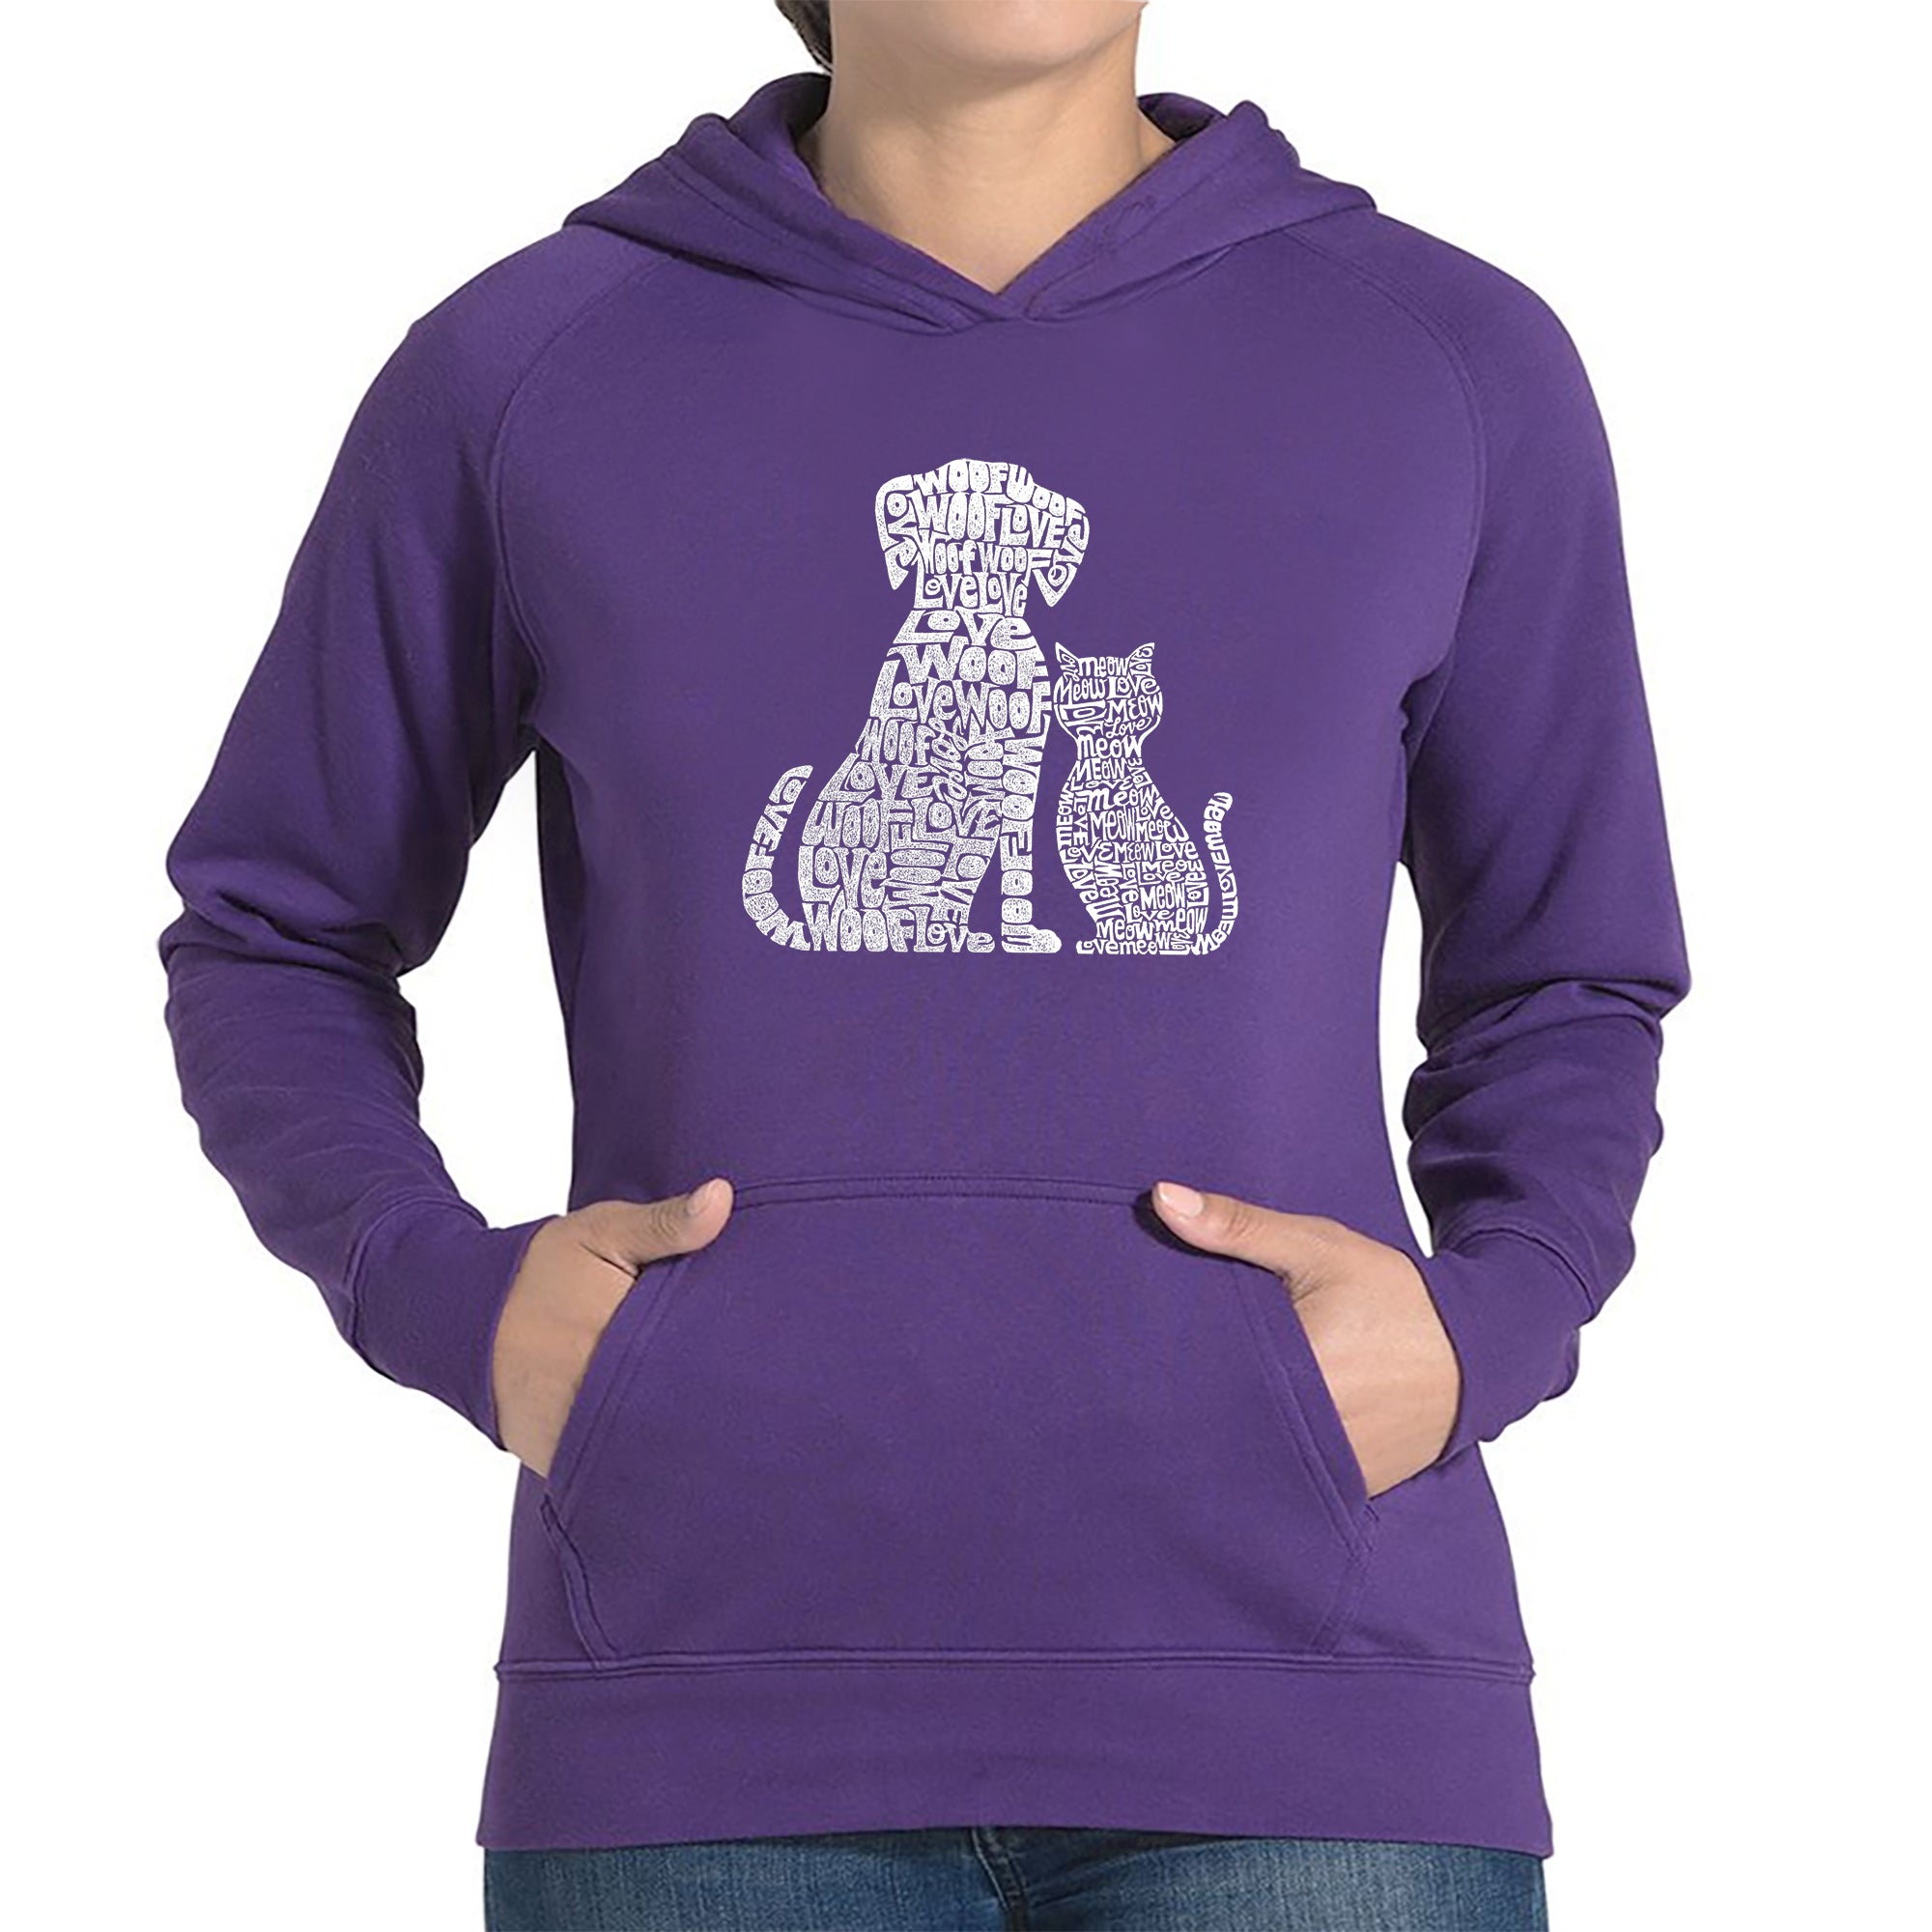 Dogs And Cats - Women's Word Art Hooded Sweatshirt - Purple - Medium